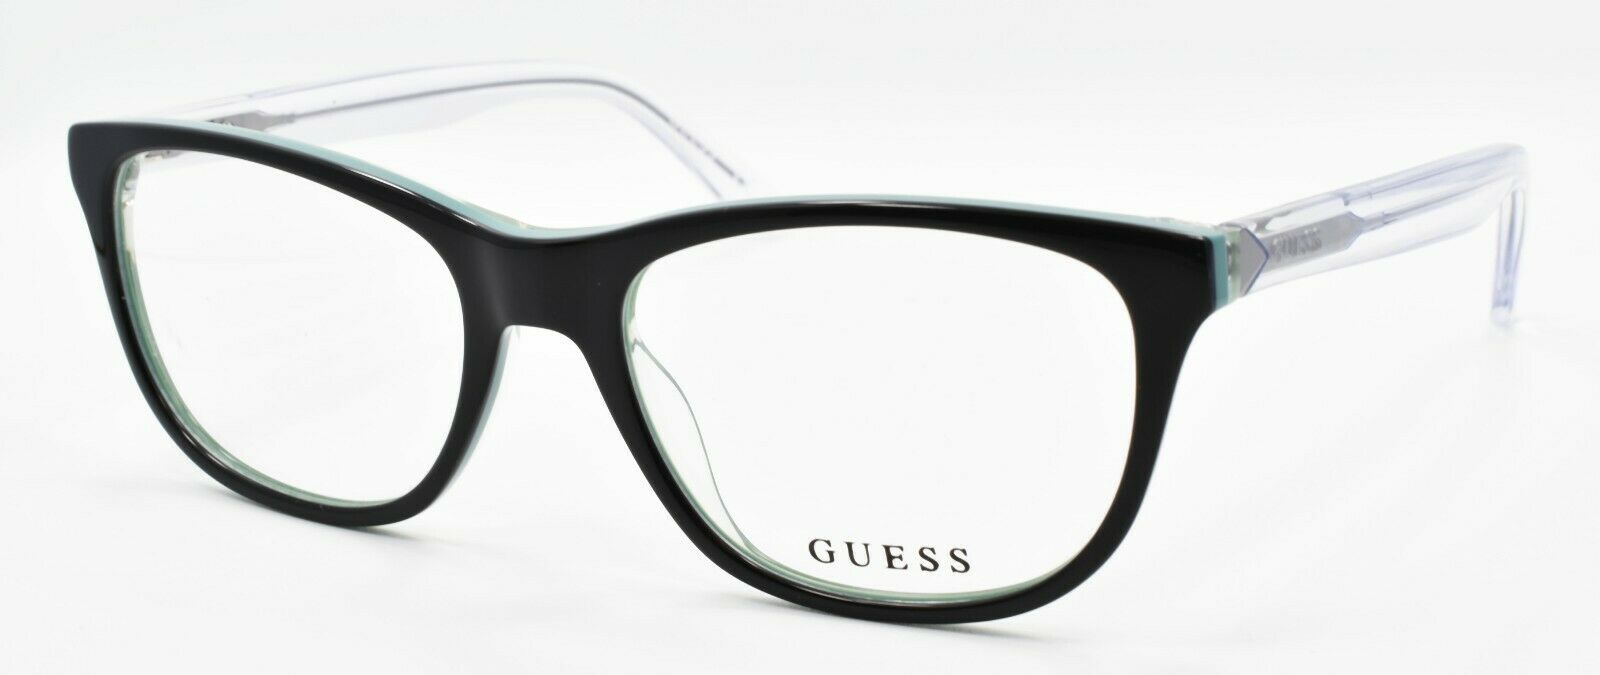 1-GUESS GU2585 005 Women's Eyeglasses Frames Cat-eye 52-17-135 Black / Clear +CASE-664689837342-IKSpecs